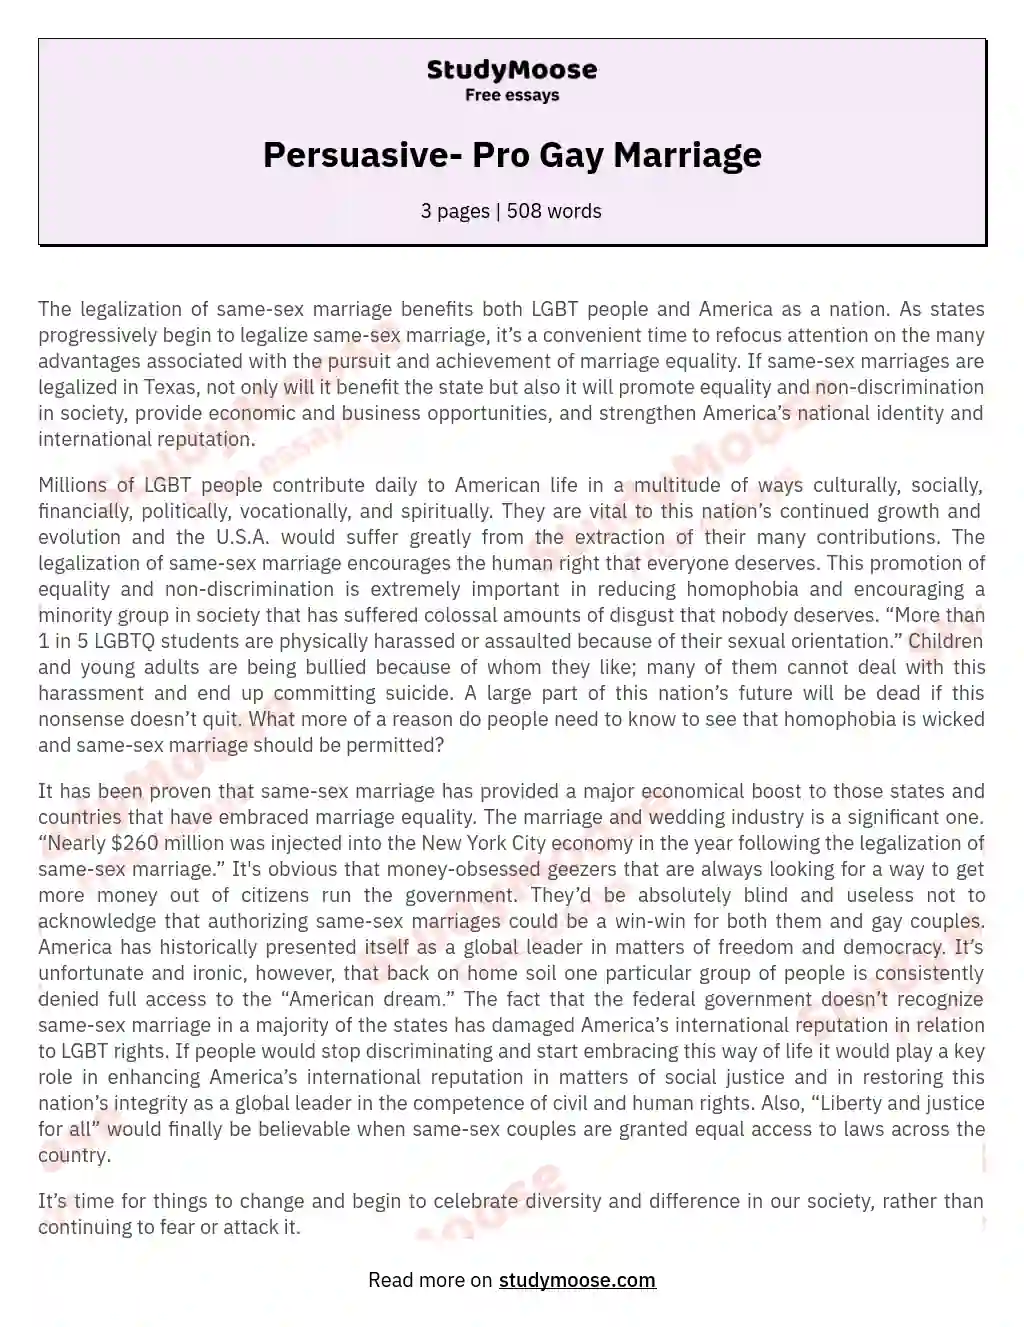 gay marriage argumentative essay topics